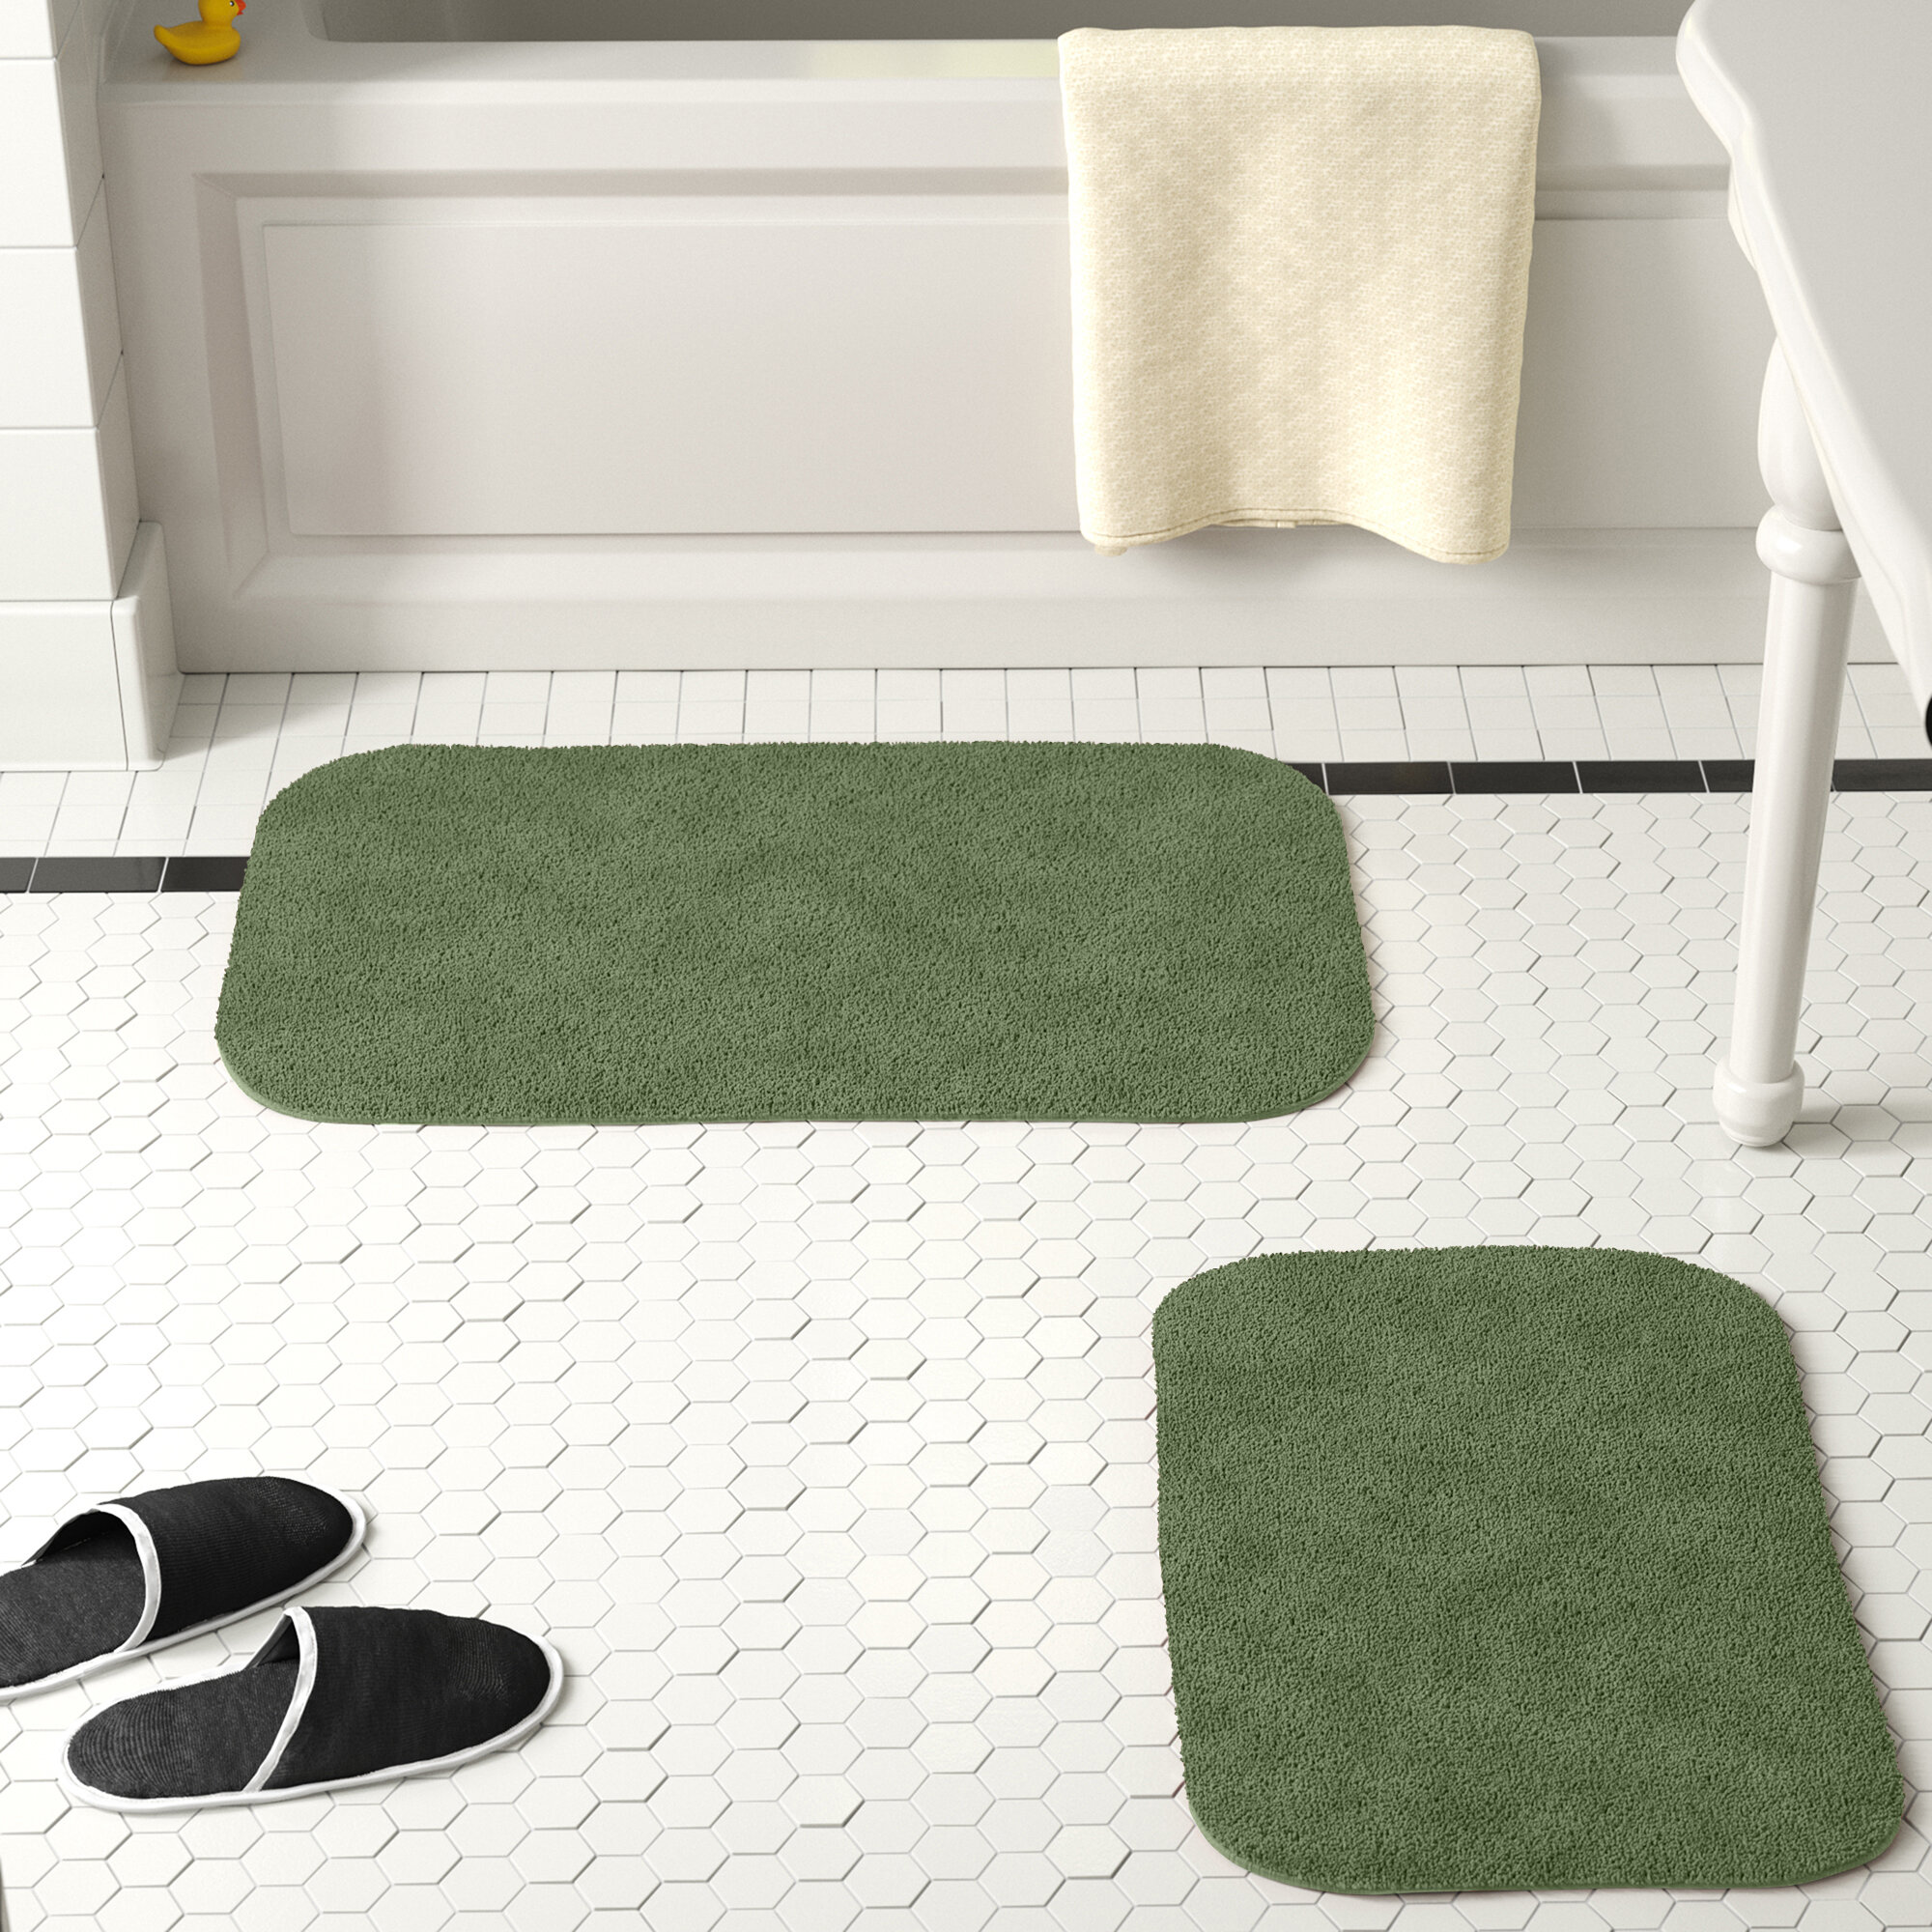 Bathroom Rugs 3 Piece Set - Non-slip Ultra Thin Bath Rugs For Bathroom  Floor[boston] : Target